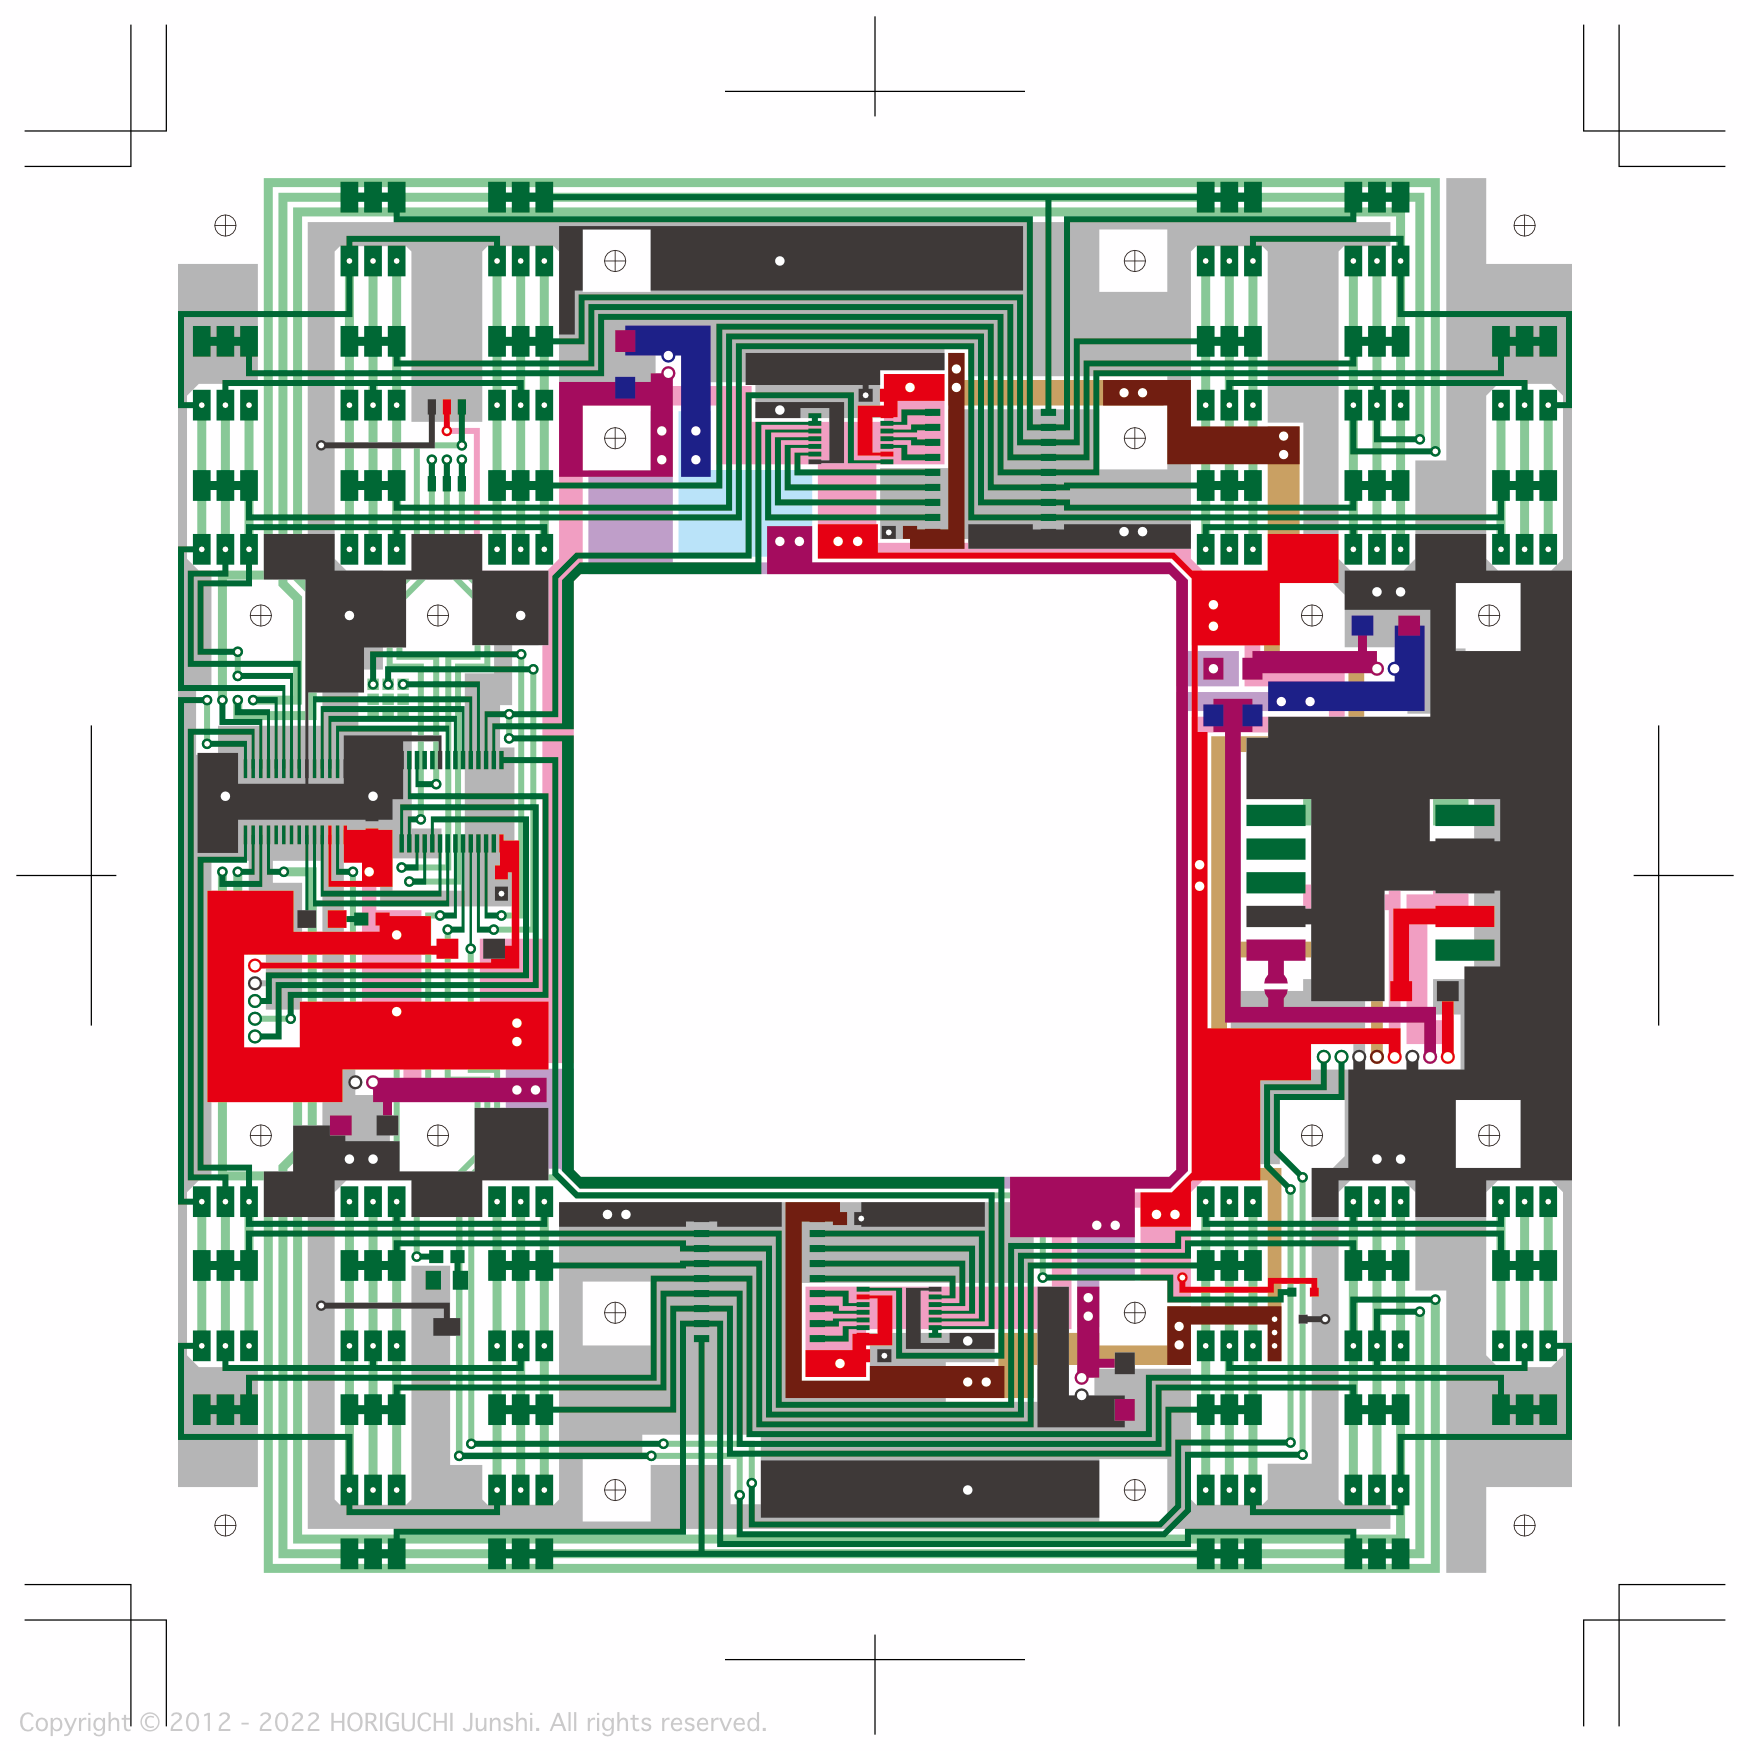 Solar + 5V unit PCB design